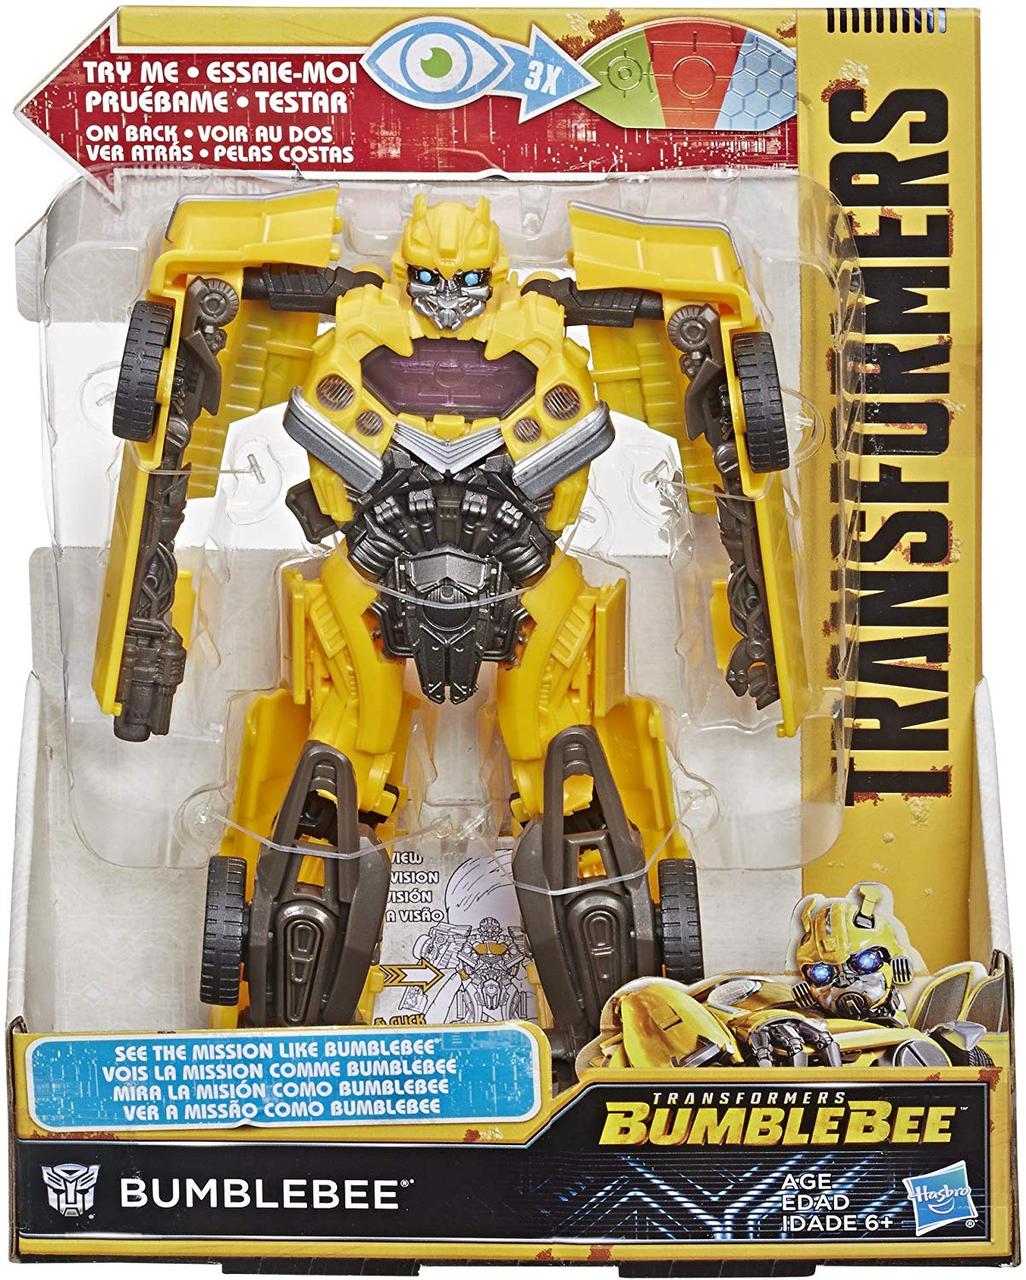 Transformers Bumblebee Mission Vision Bumblebee Hasbro E4104 Трансформер Бамблбі автоботи Місія Погляд